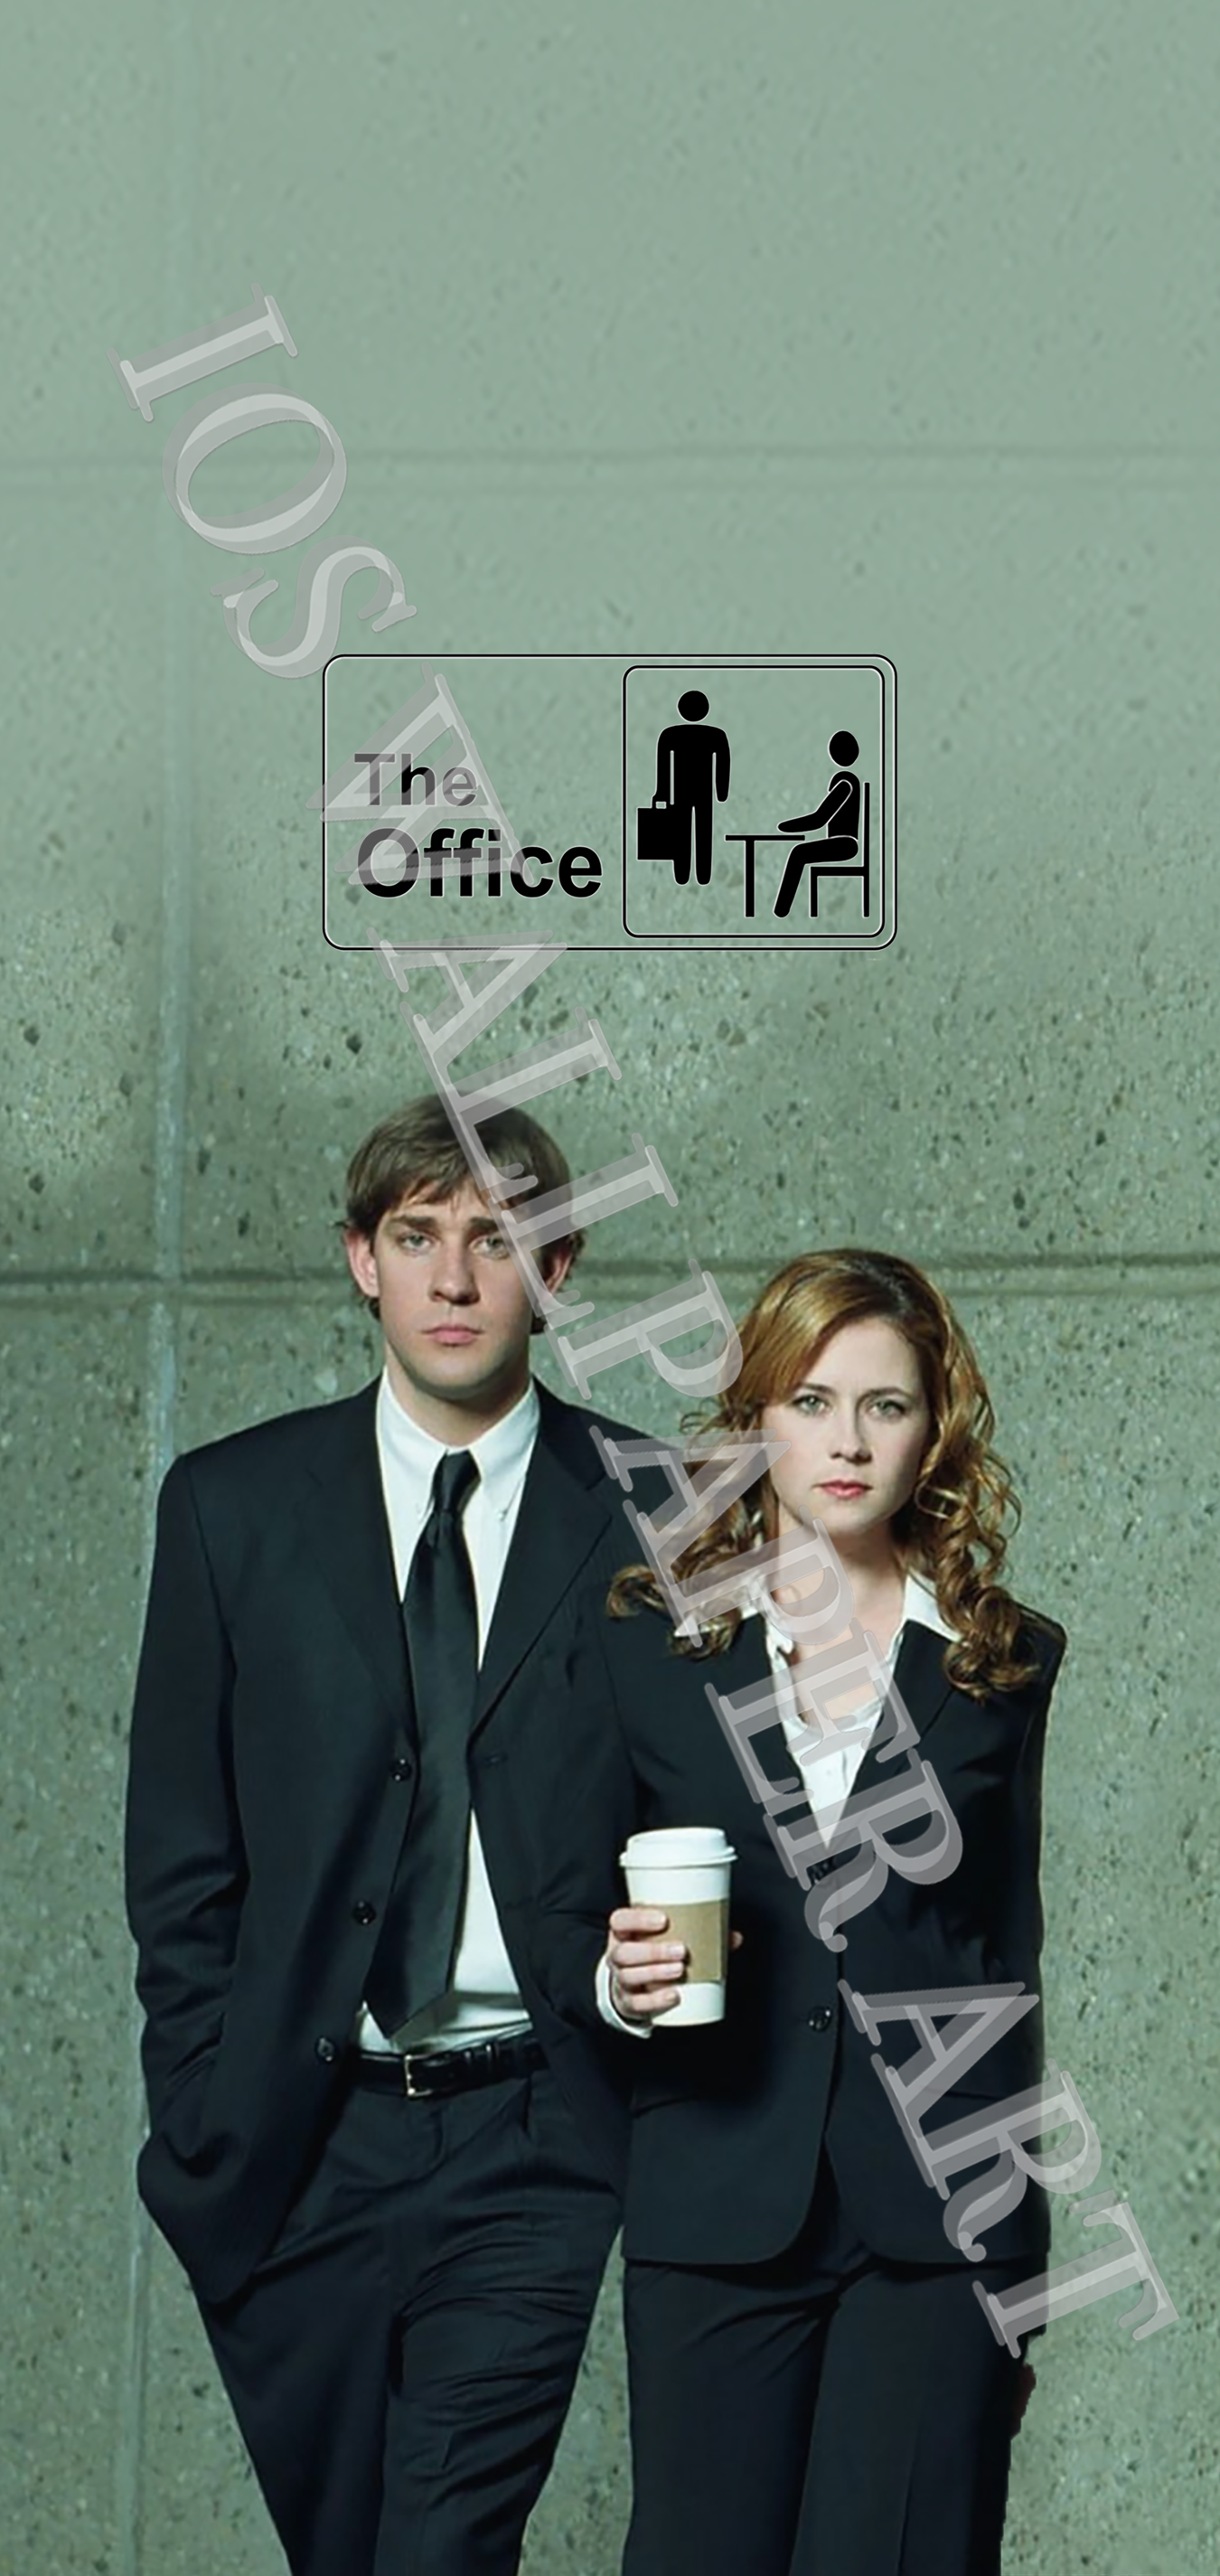 The Office - Michael, Dwight, Ryan, Jim, Pam | Digital Download